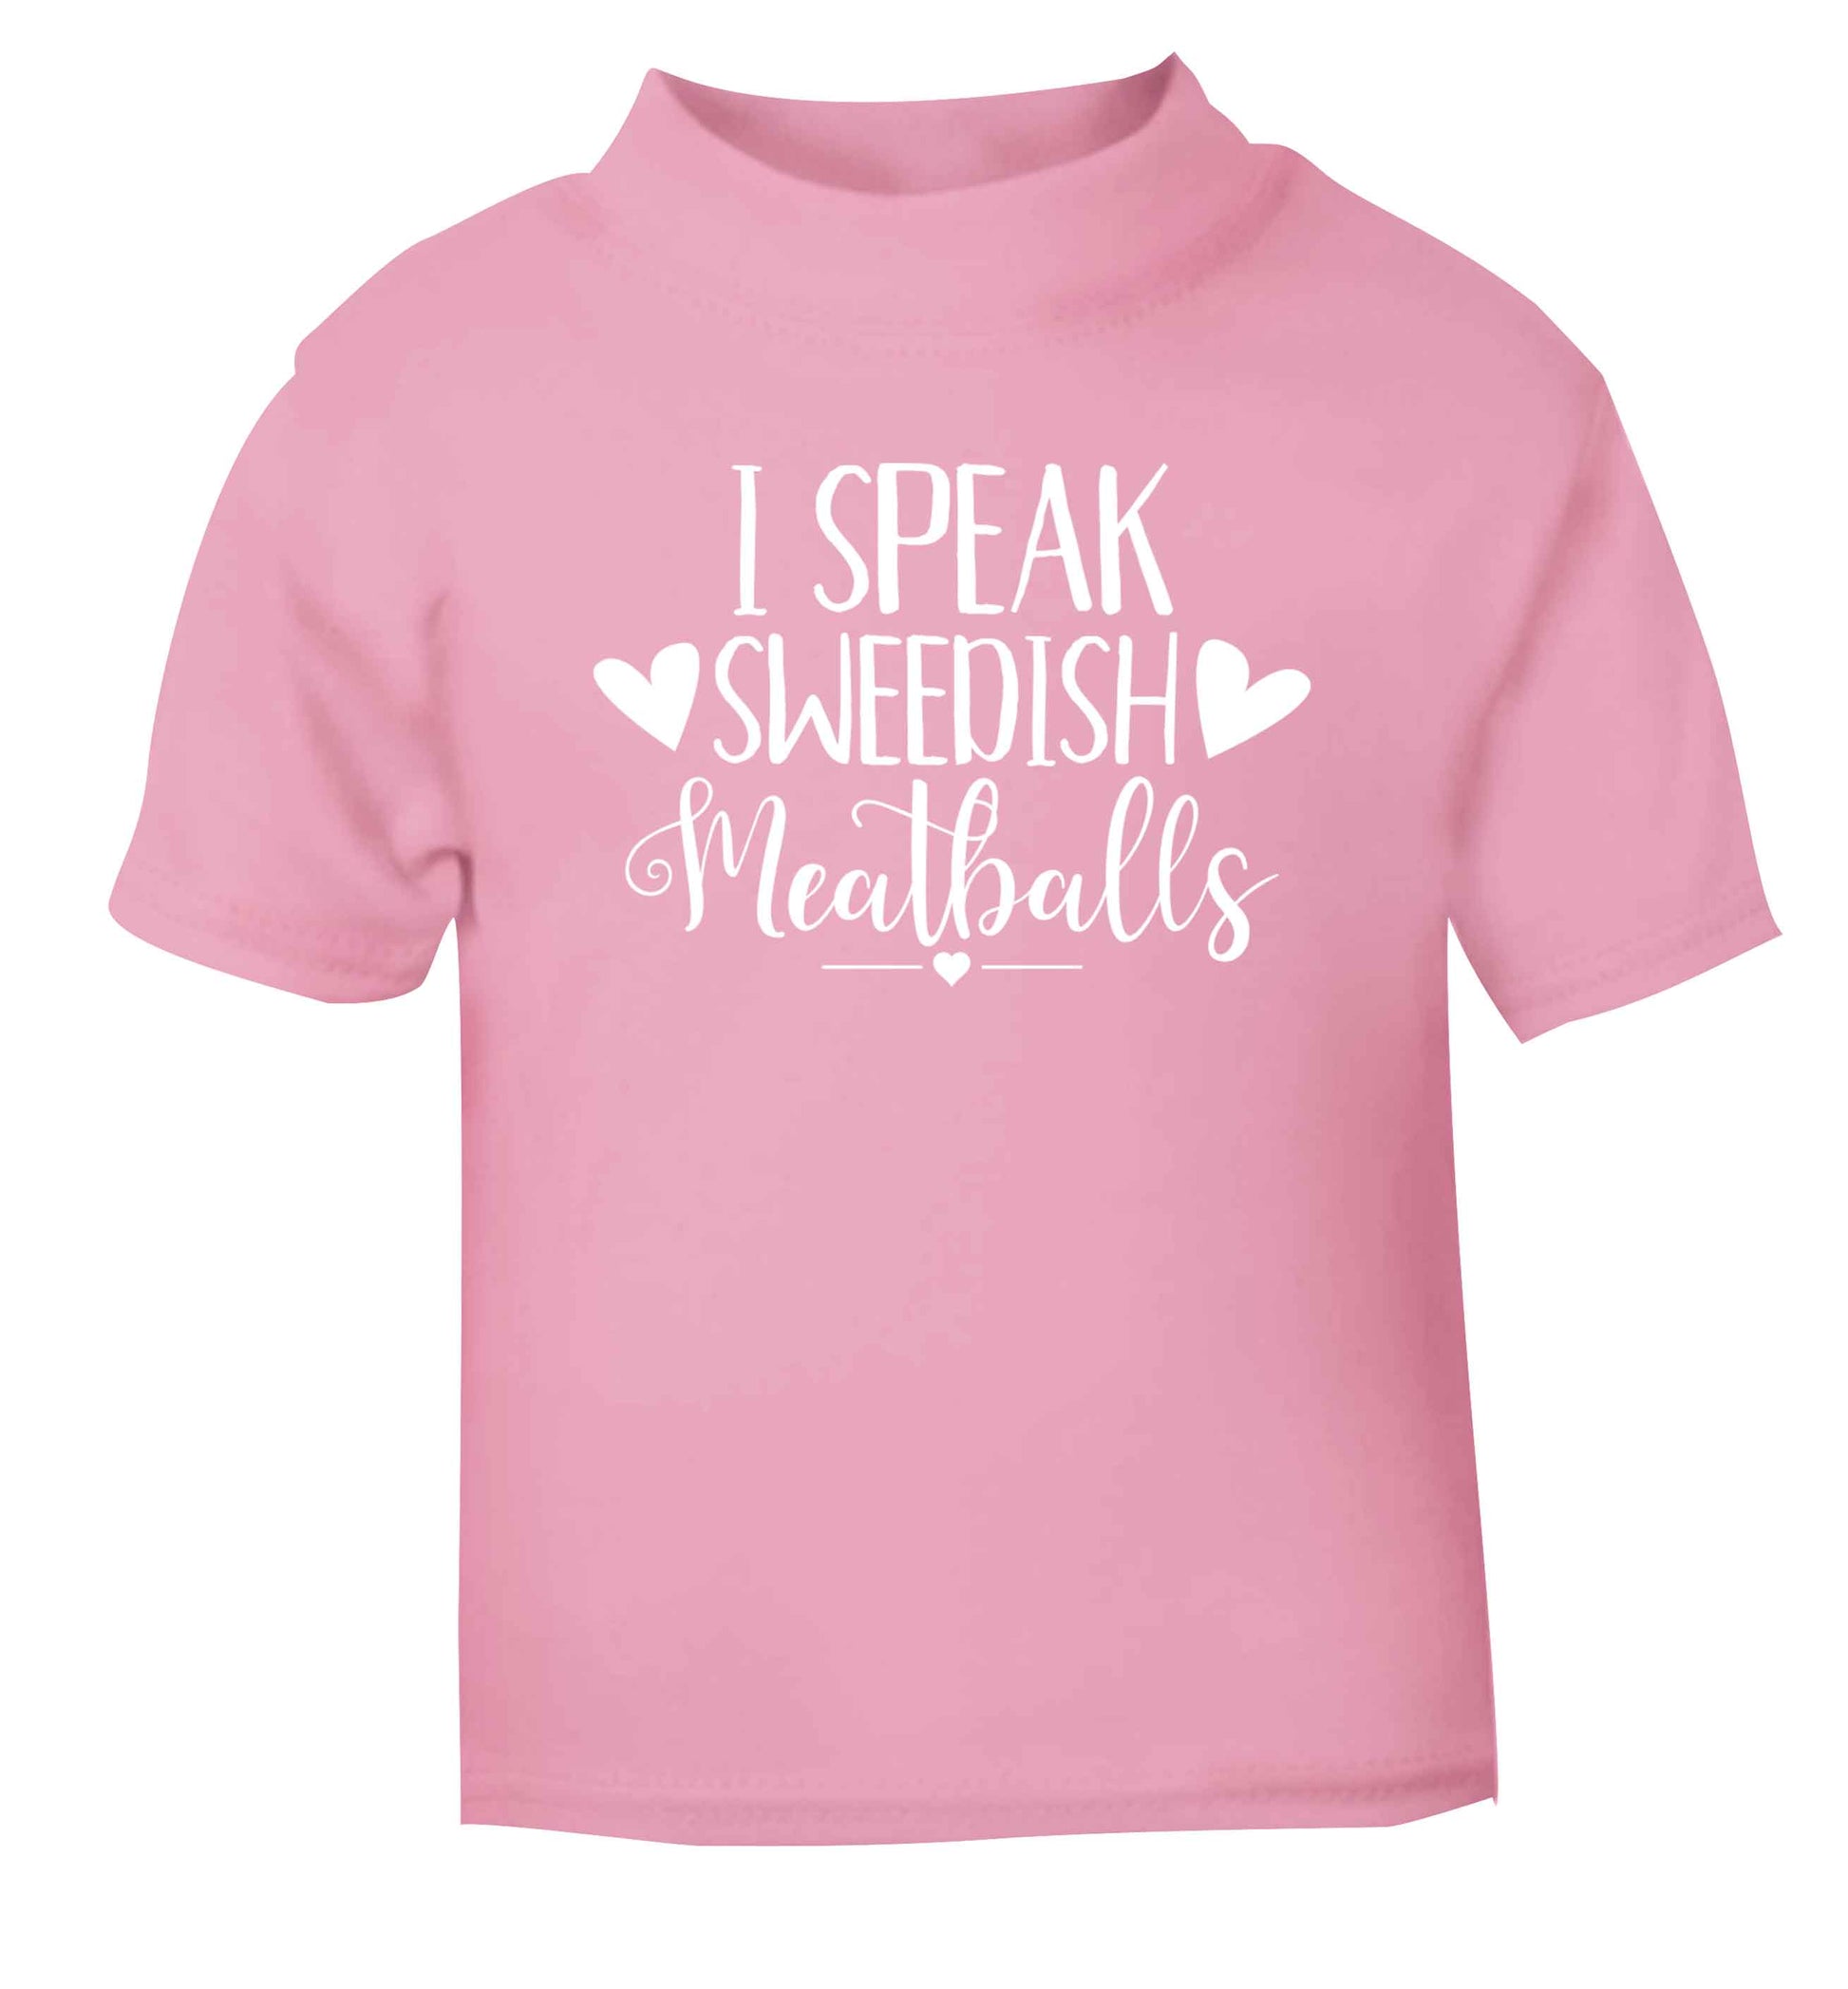 I speak sweedish...meatballs light pink Baby Toddler Tshirt 2 Years